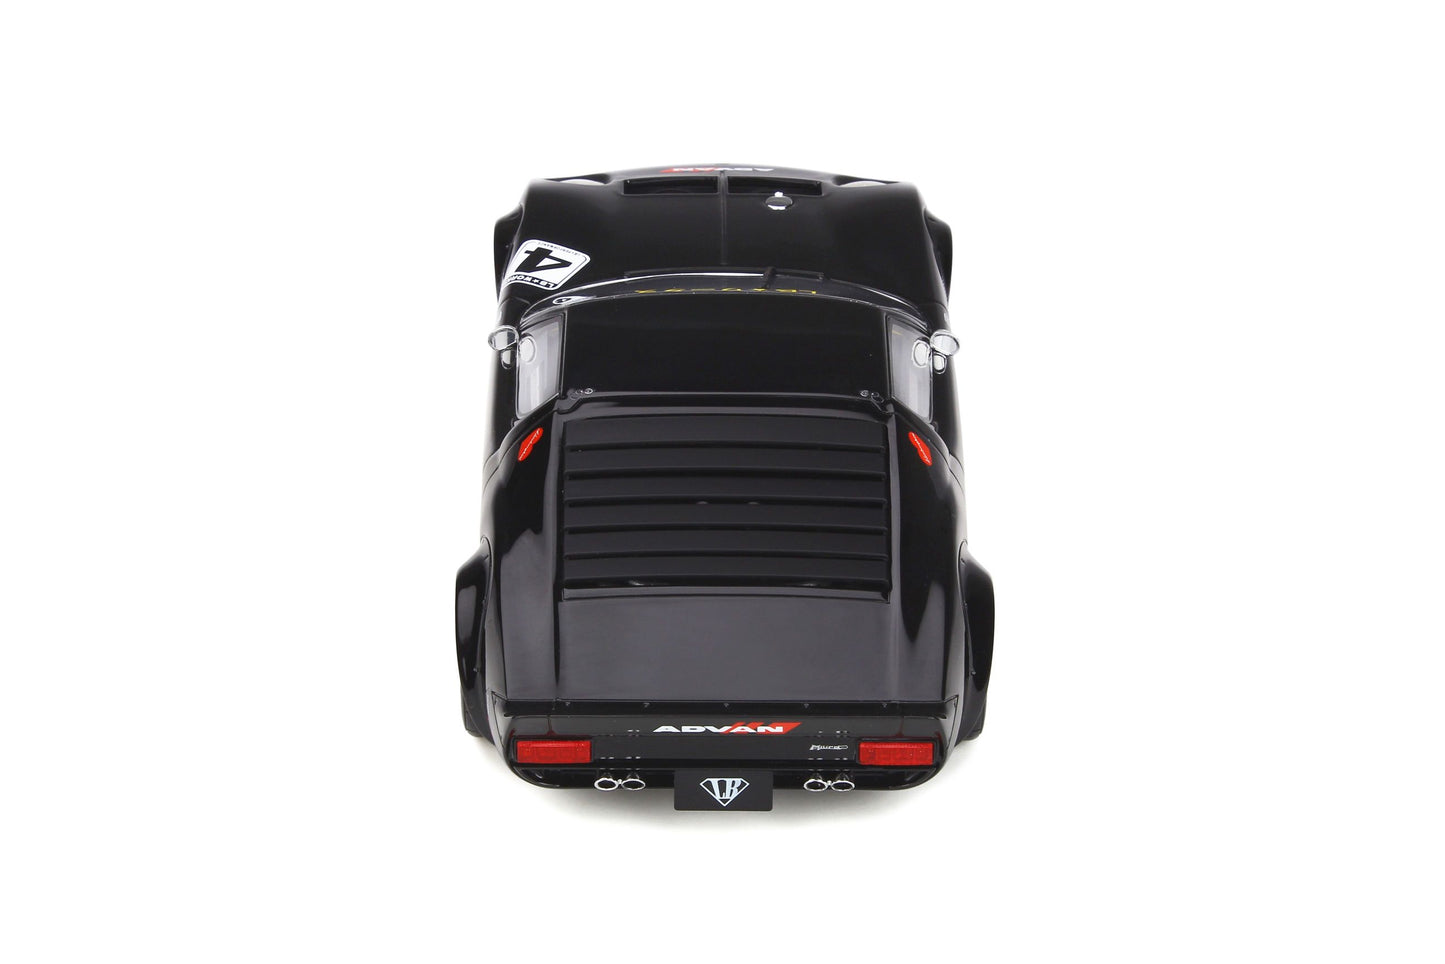 GT Spirit - Liberty Walk Lamborghini Miura (Black) 1:18 Scale Model Car